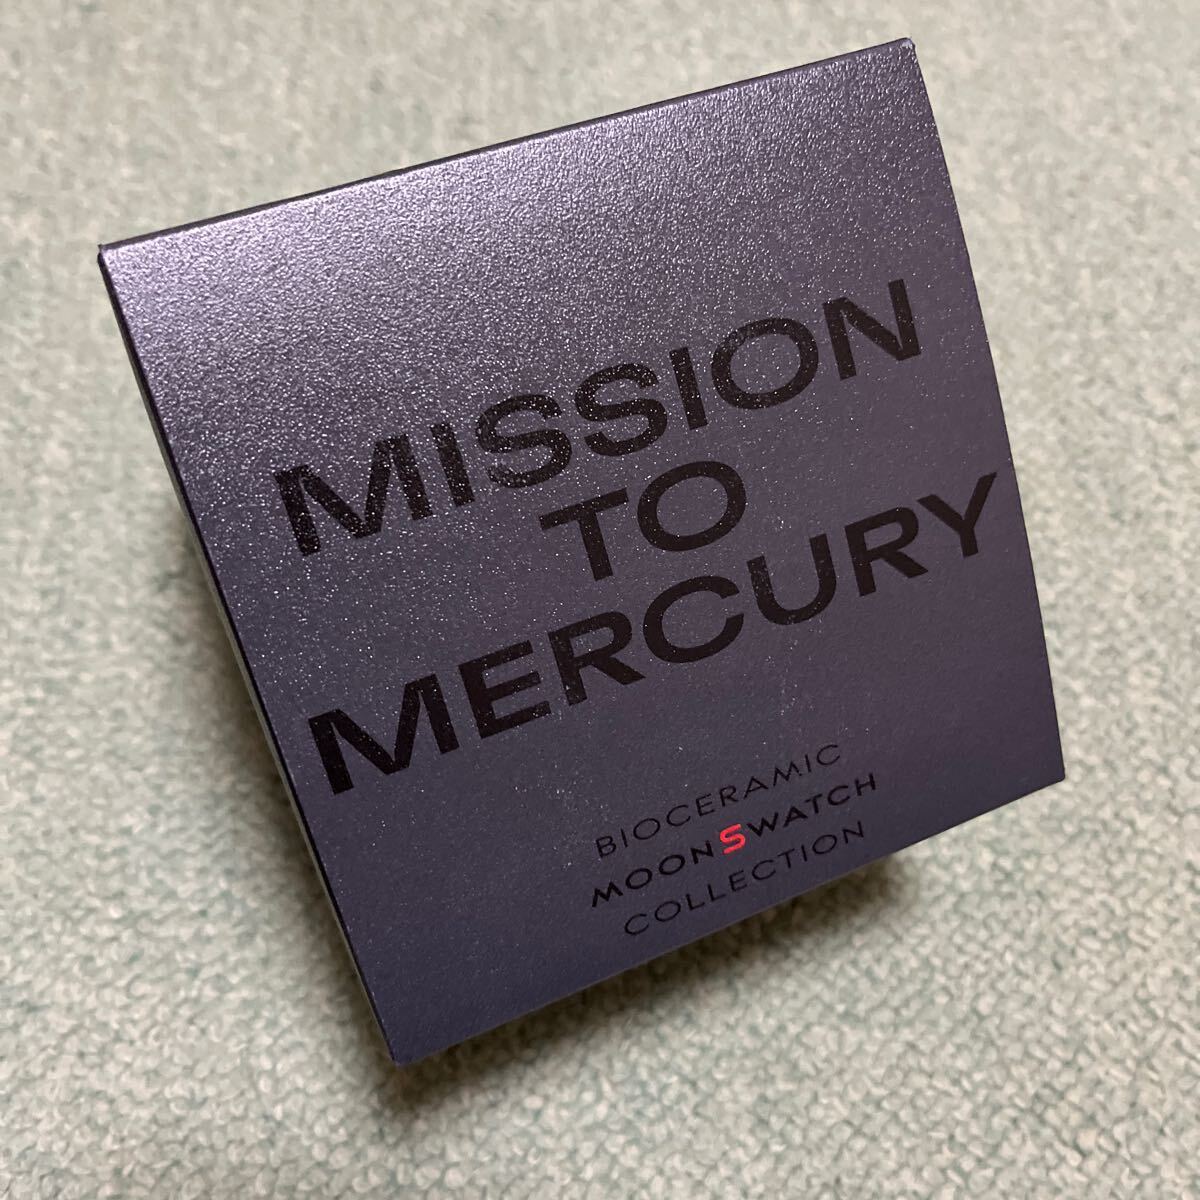  Mercury Swatch Omega Mission to Mercury regular goods beautiful goods almost unused free shipping 